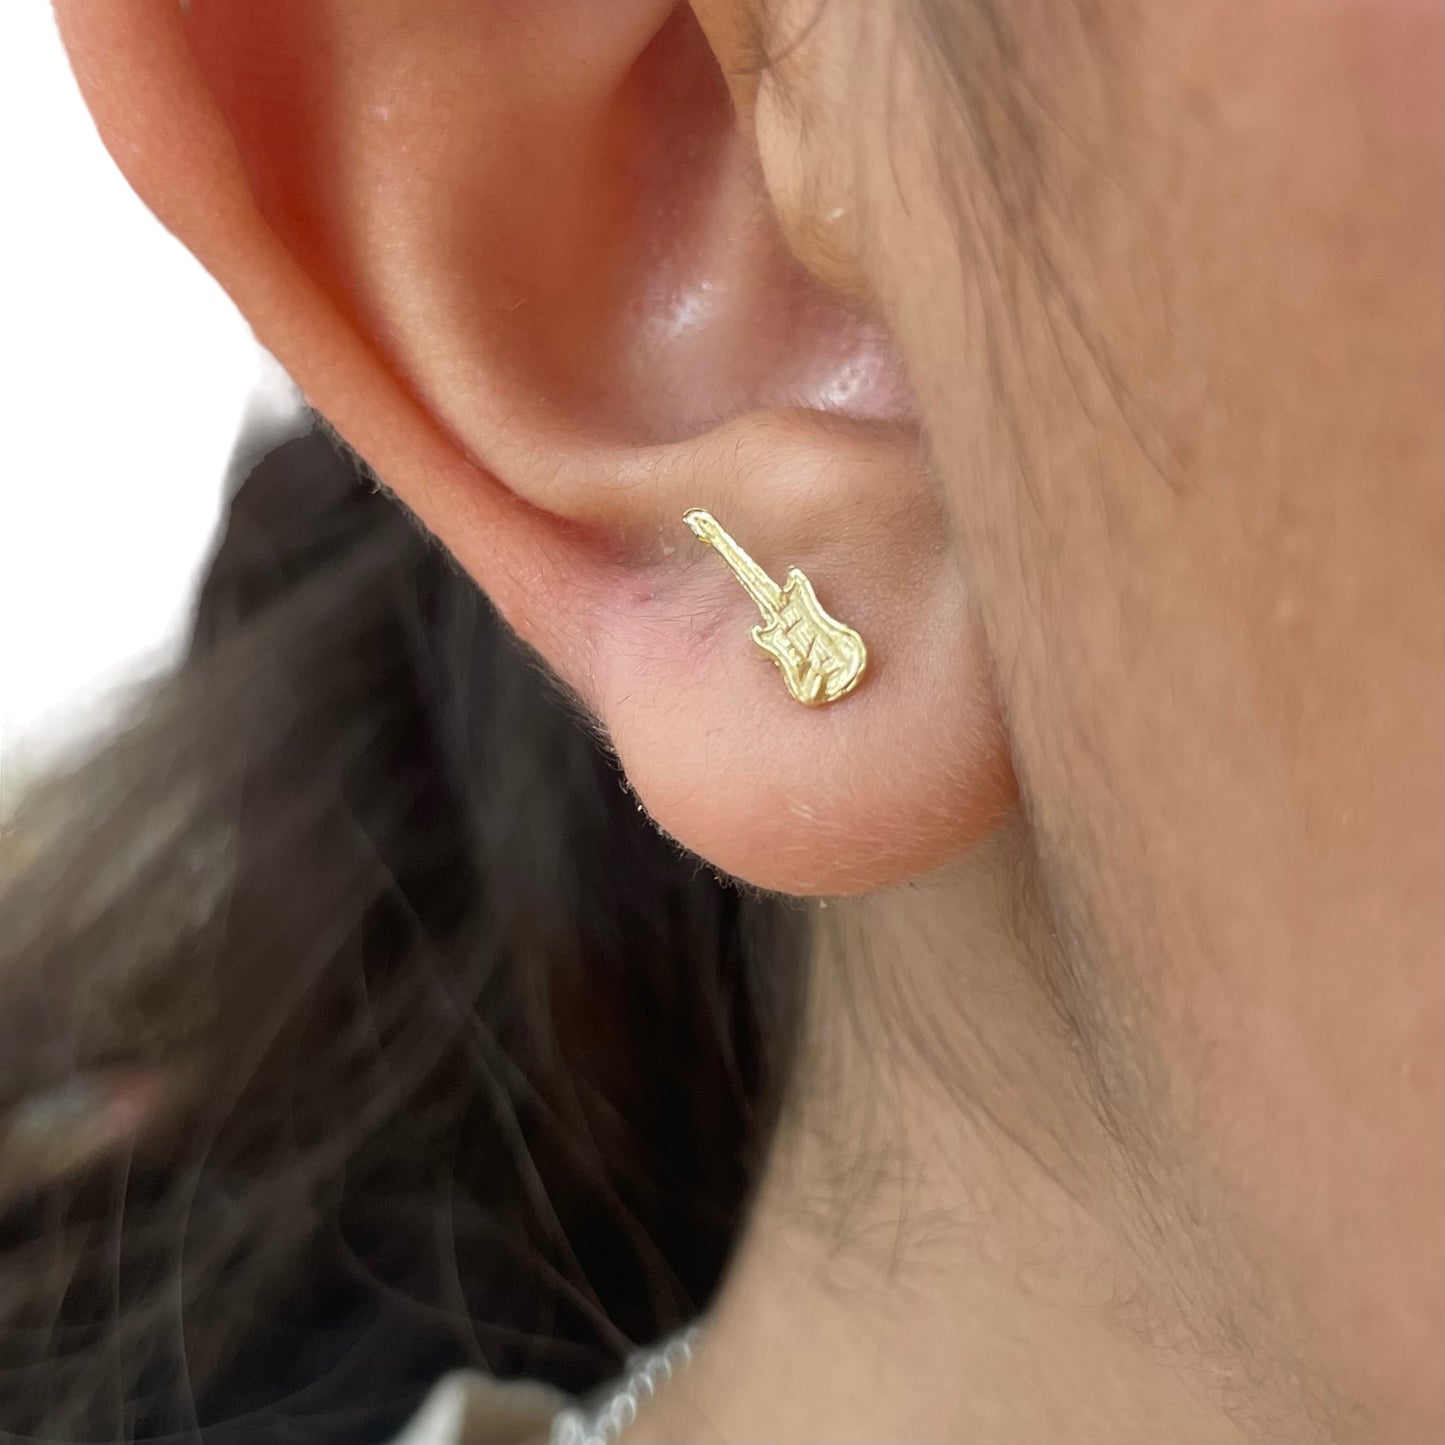 Stud earrings - Retro